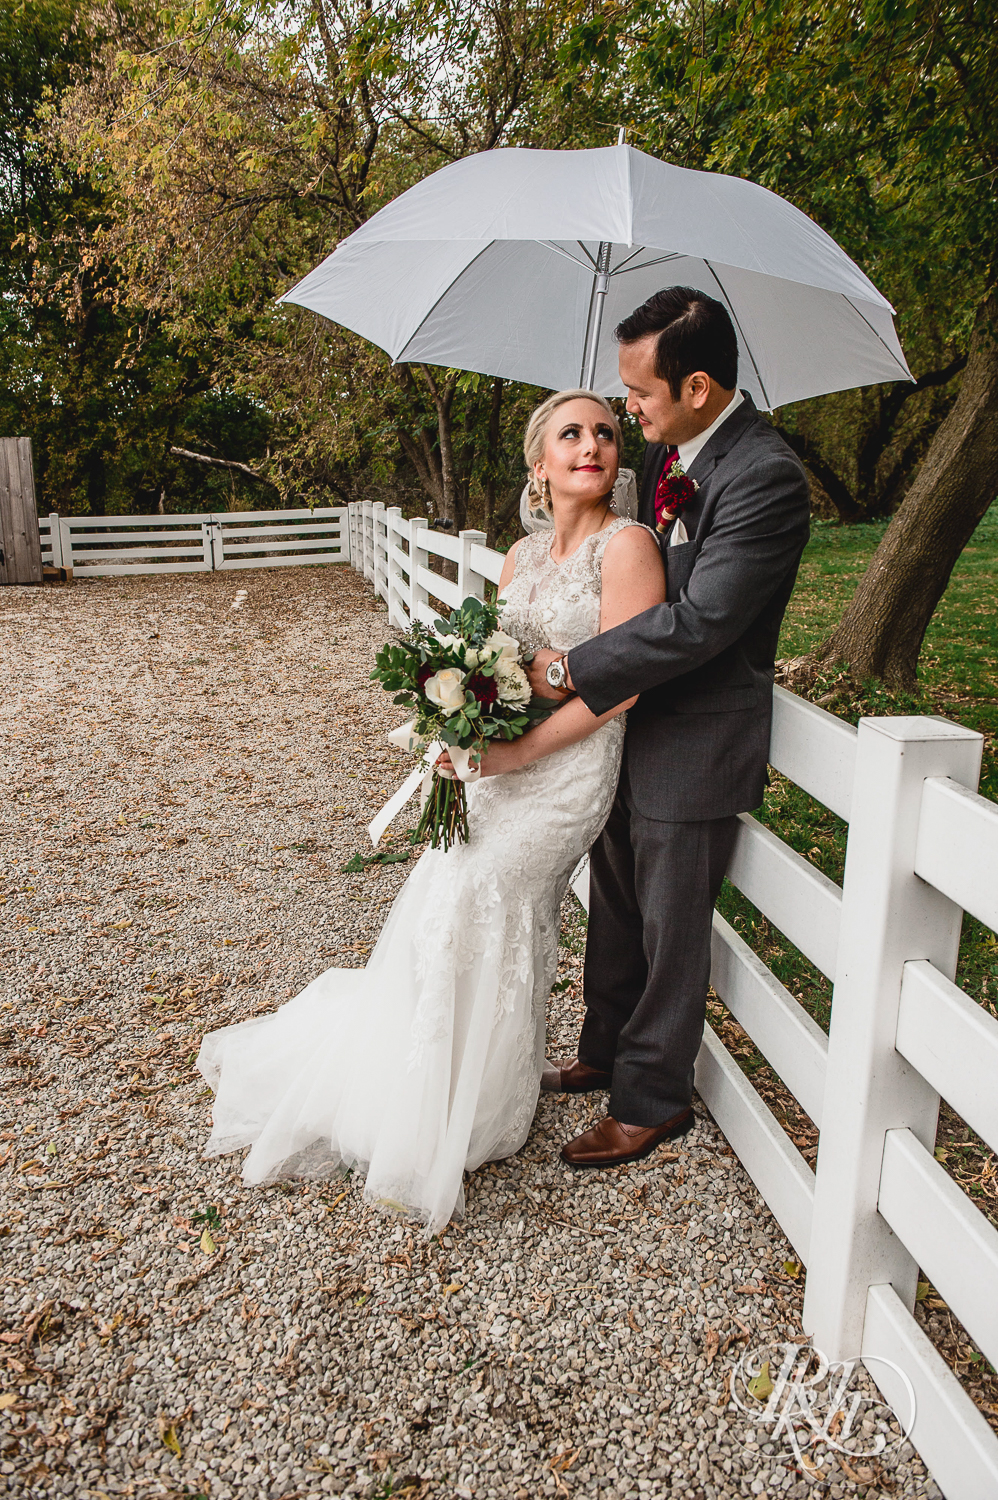 Bride and groom smile under umbrella on rainy day wedding at Green Acres Event Center in Eden Prairie, Minnesota.